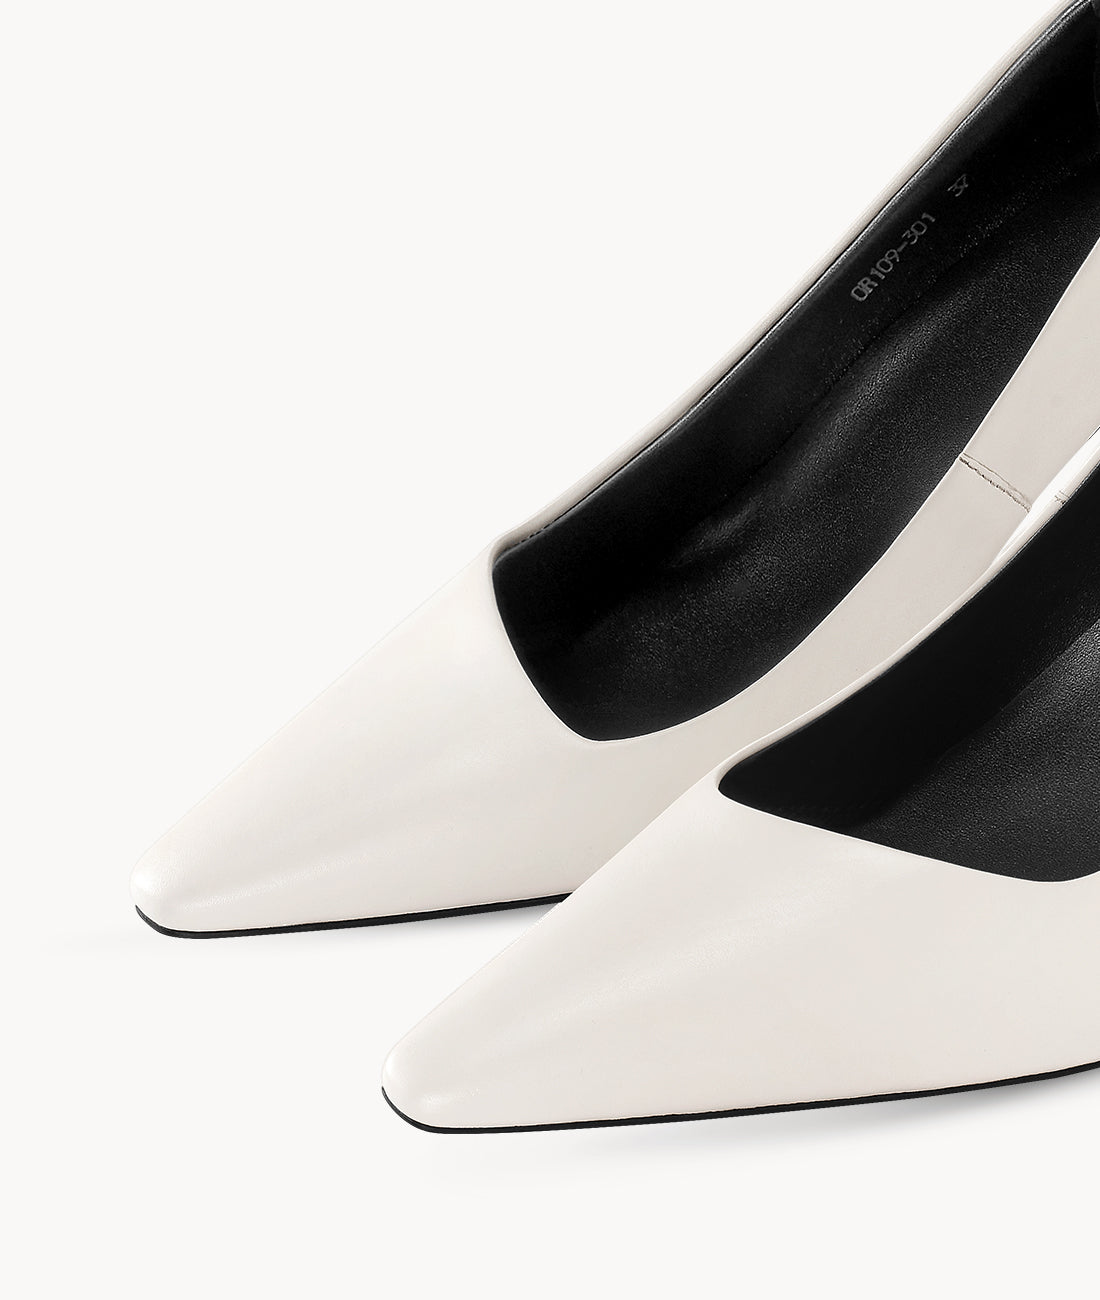 Mist black label series creamy white Luxury pump with 70mm Spool Heel